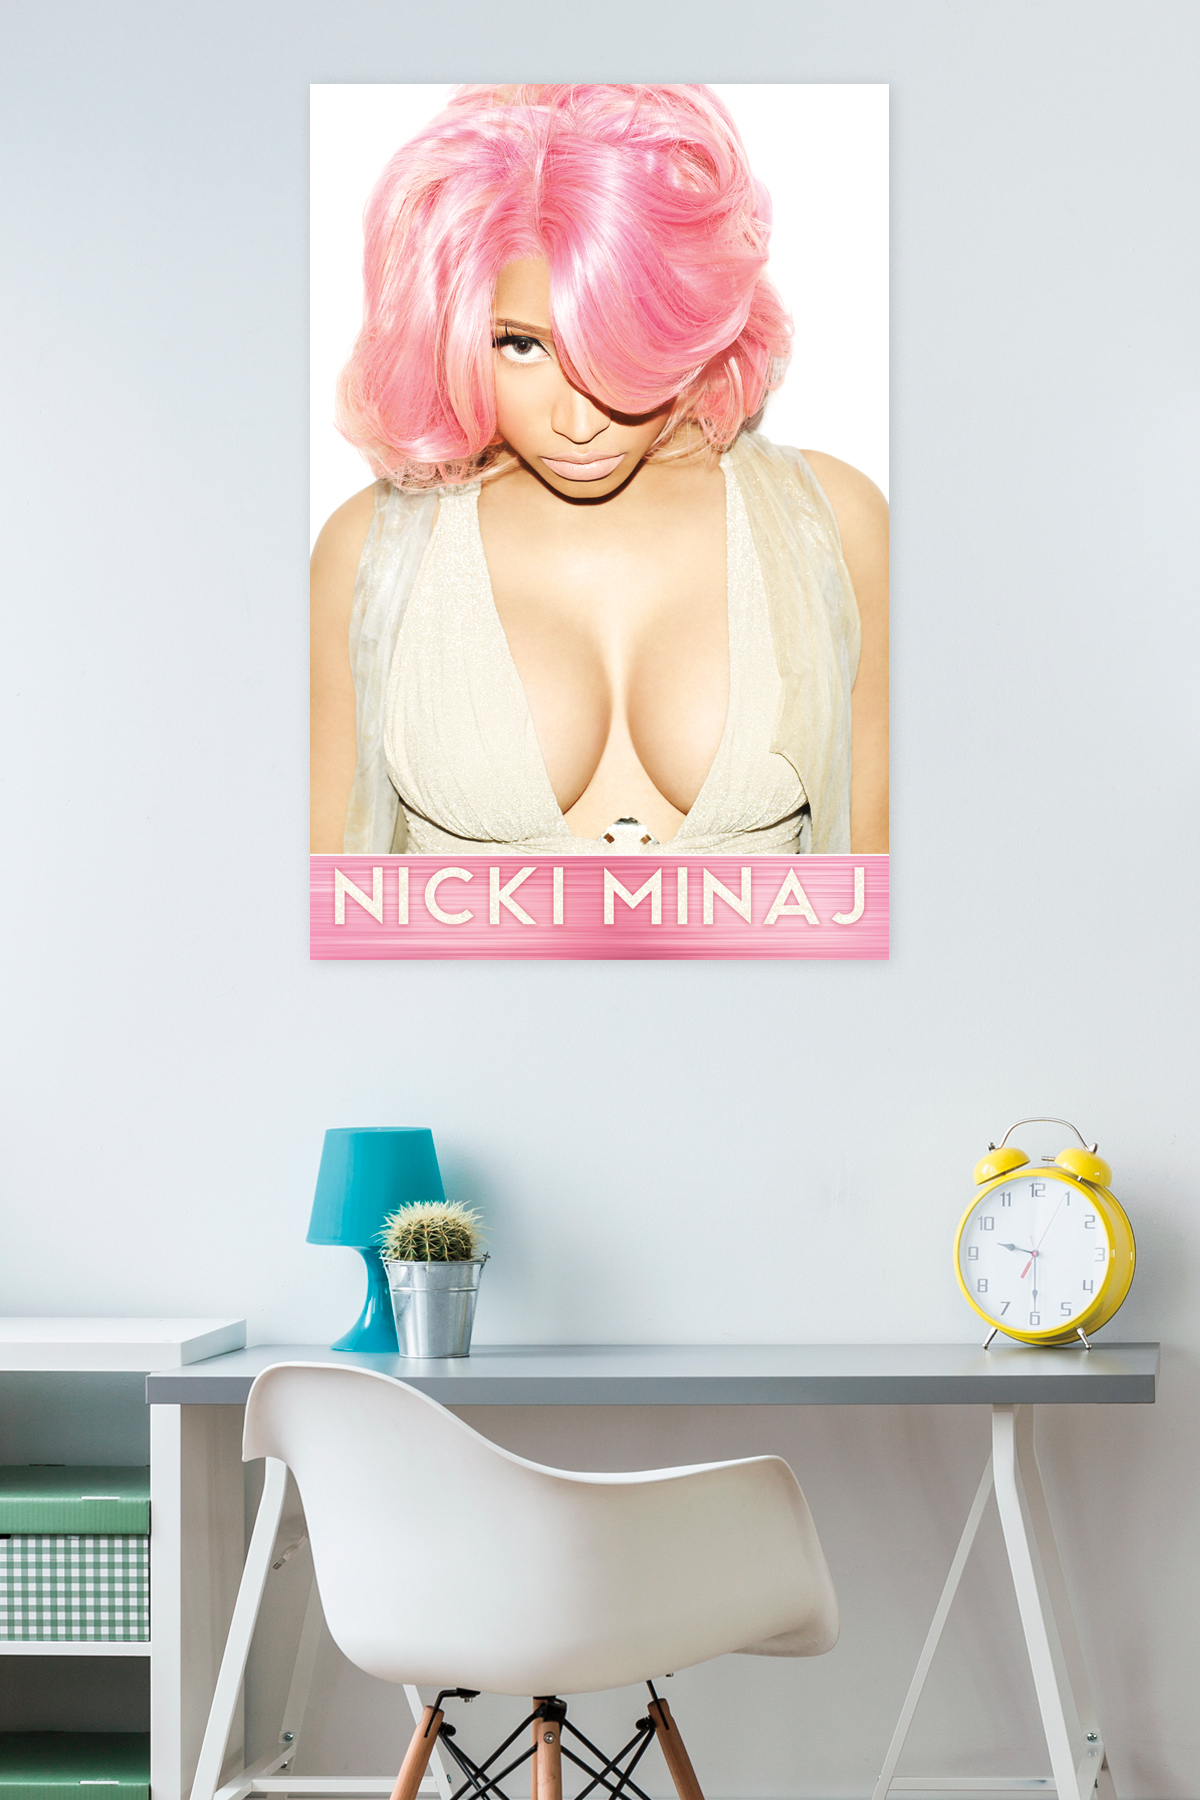 Trends International Nicki Minaj Pink Wall Poster 22.375" x 34" - image 2 of 2